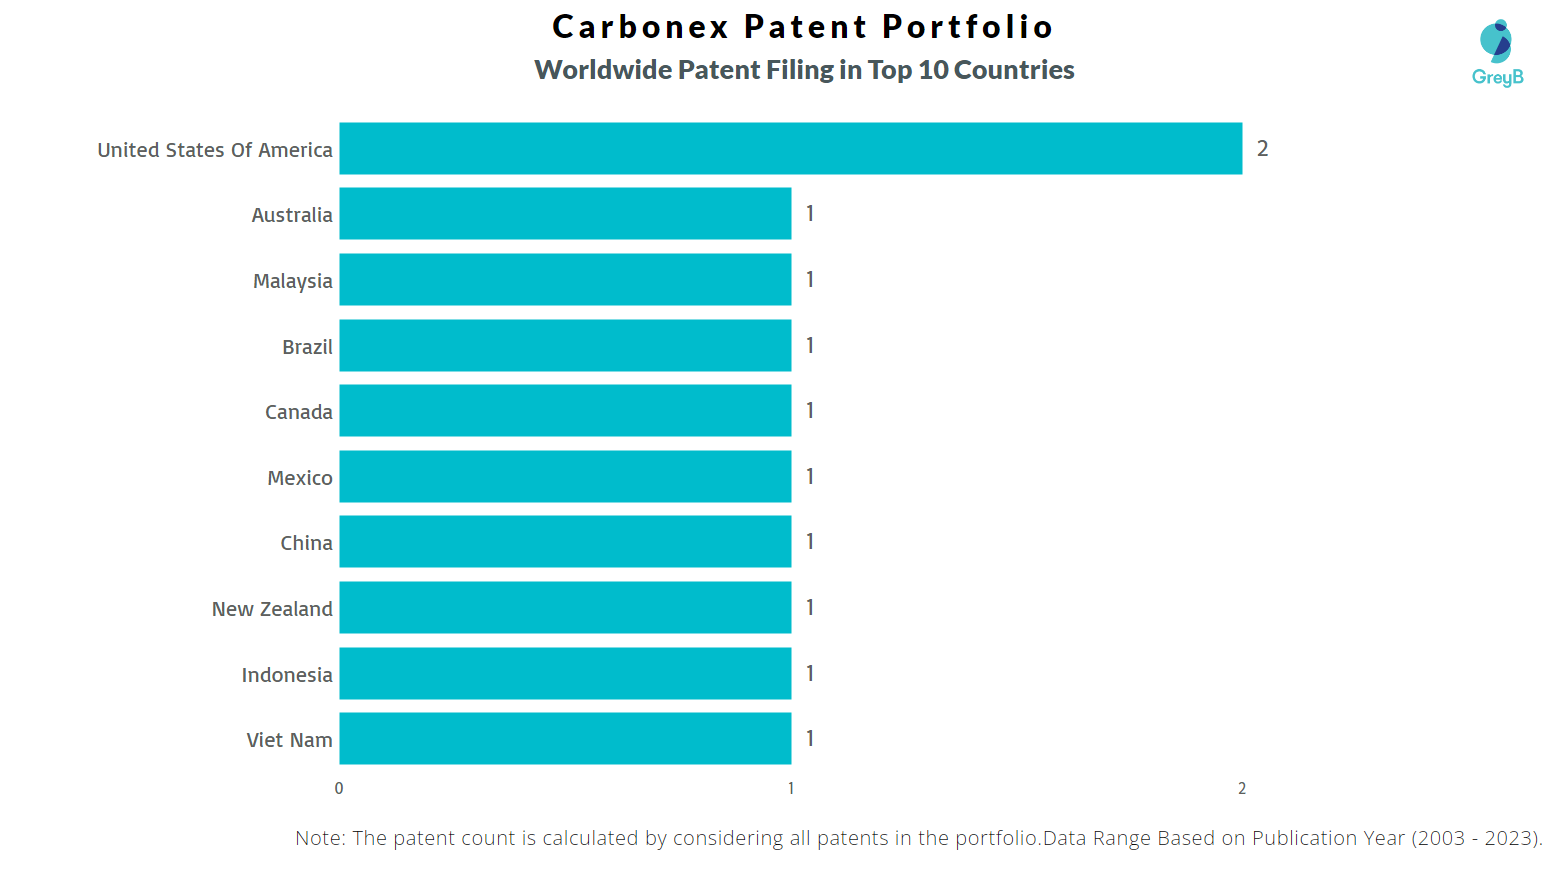 Carbonex Worldwide Patent Filing